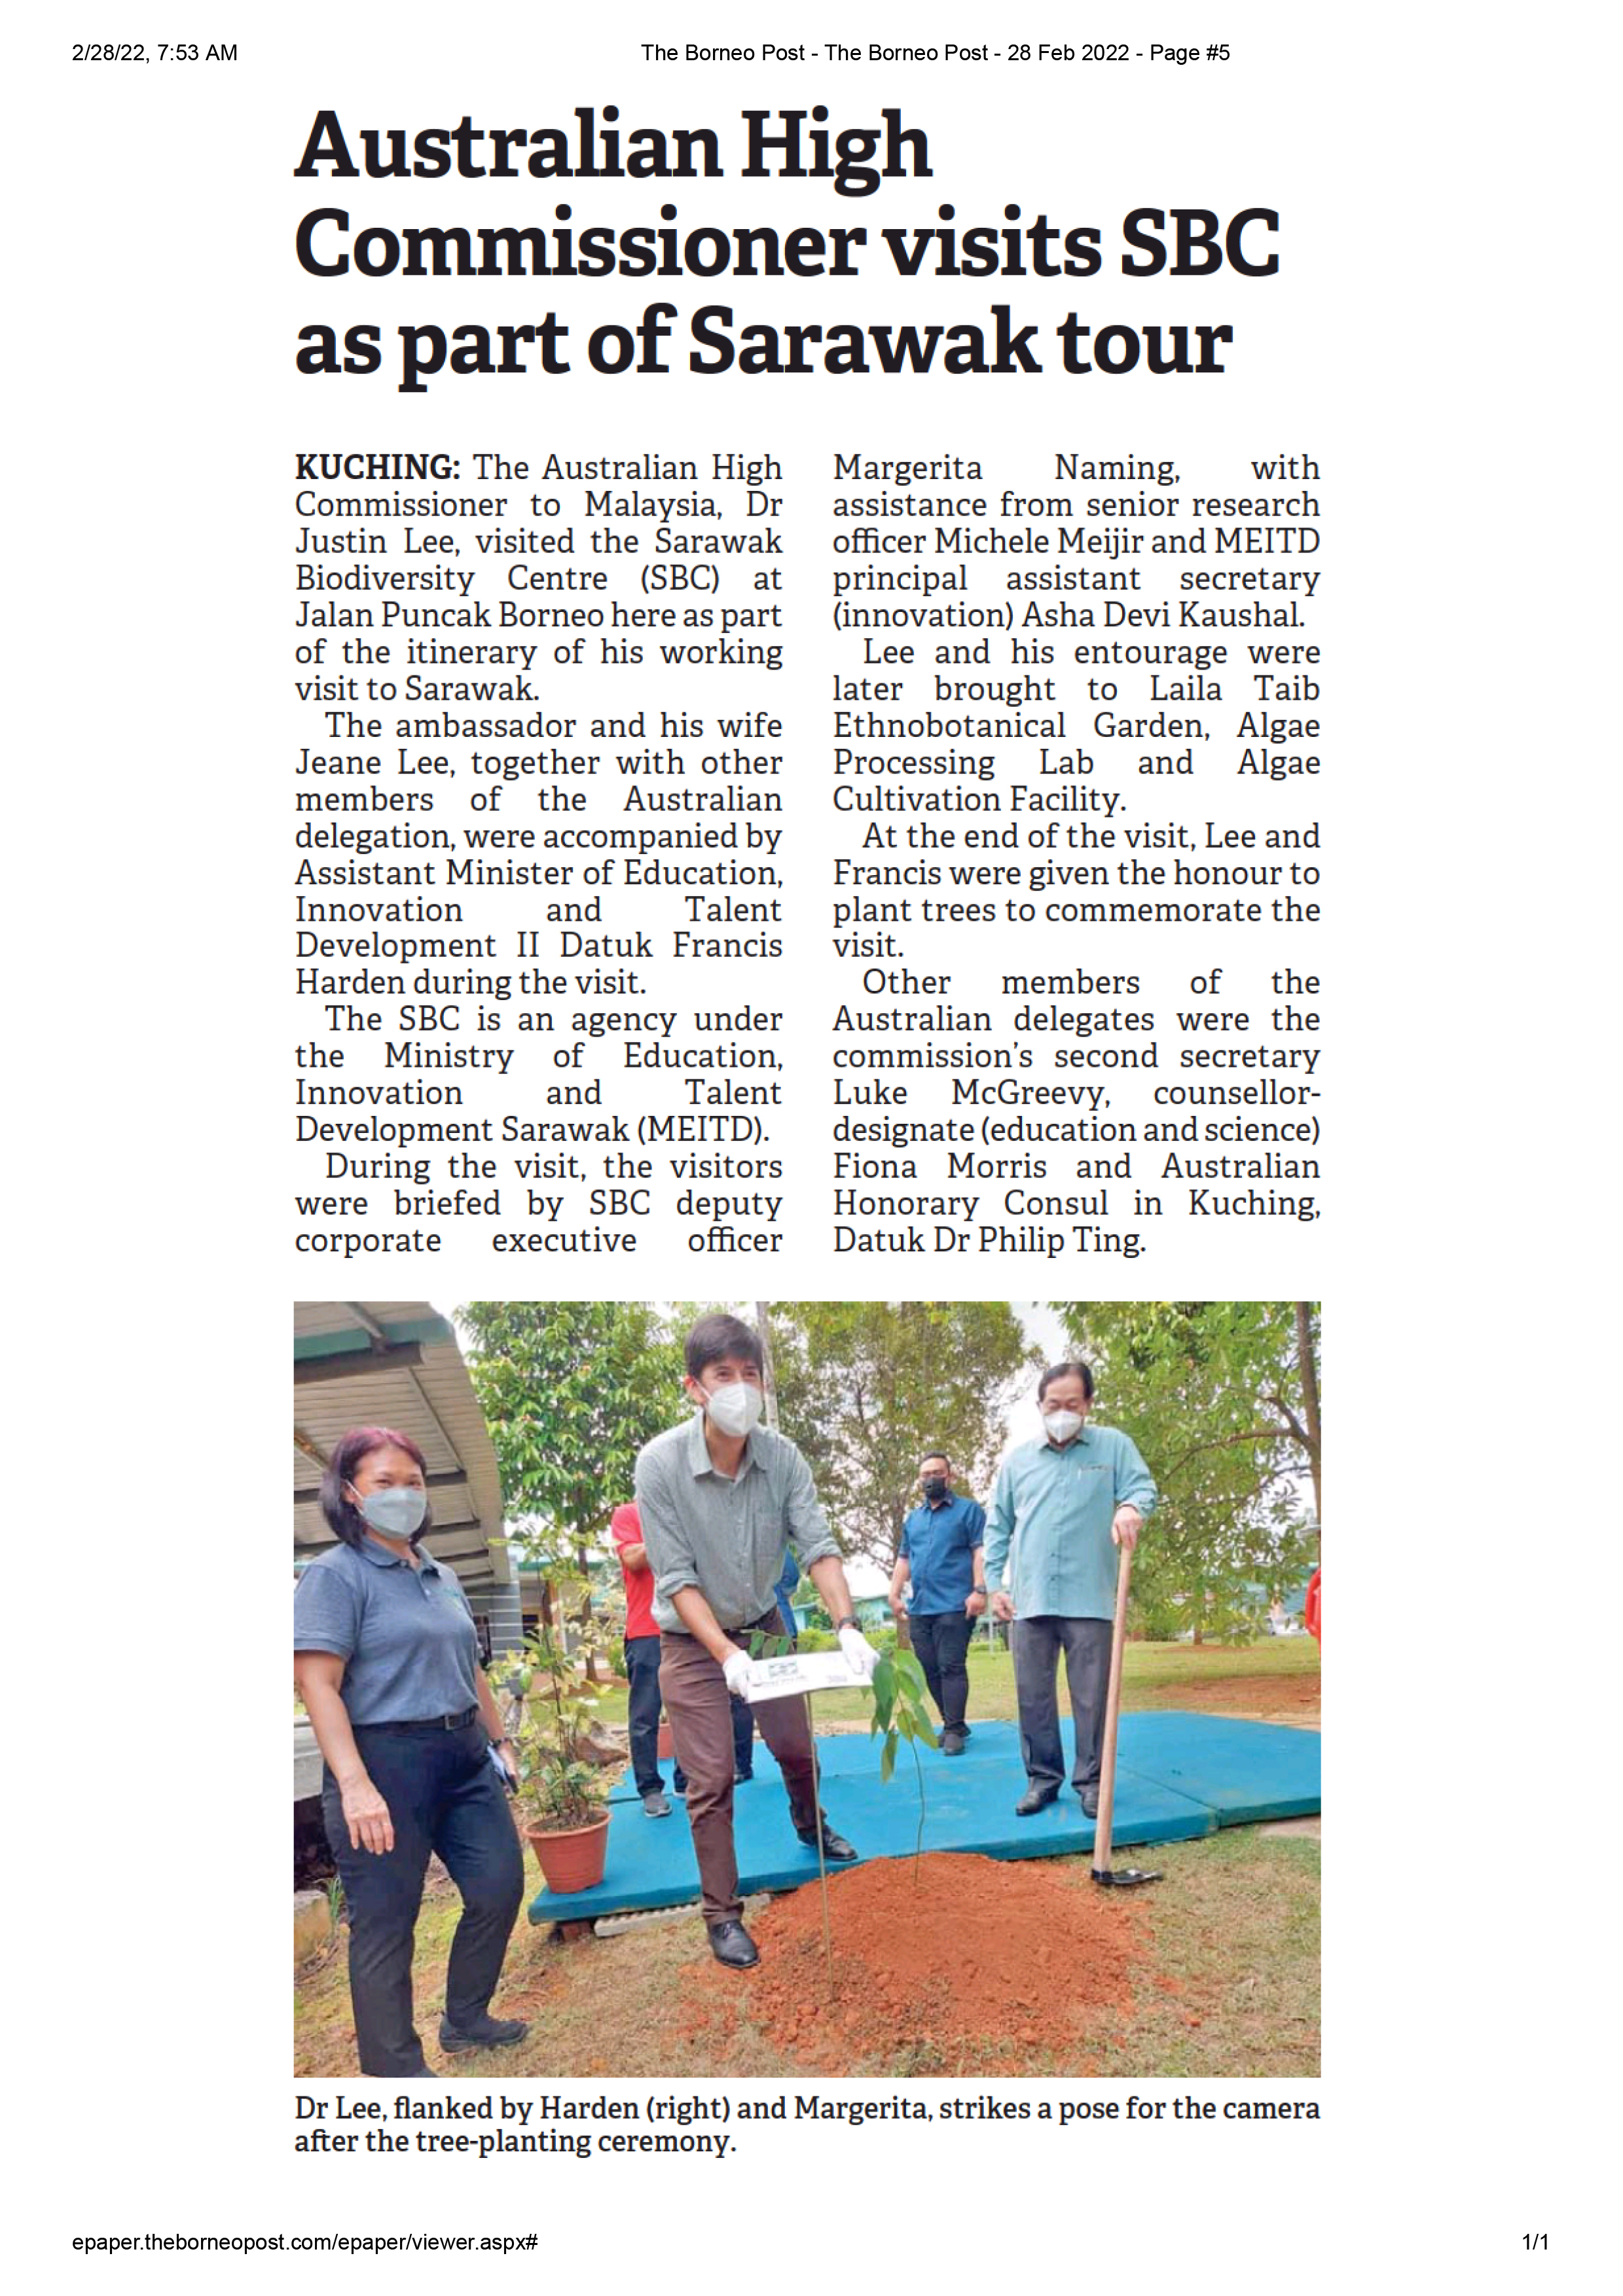 Australian High Commissioner visits SBC as part of Sarawak tour